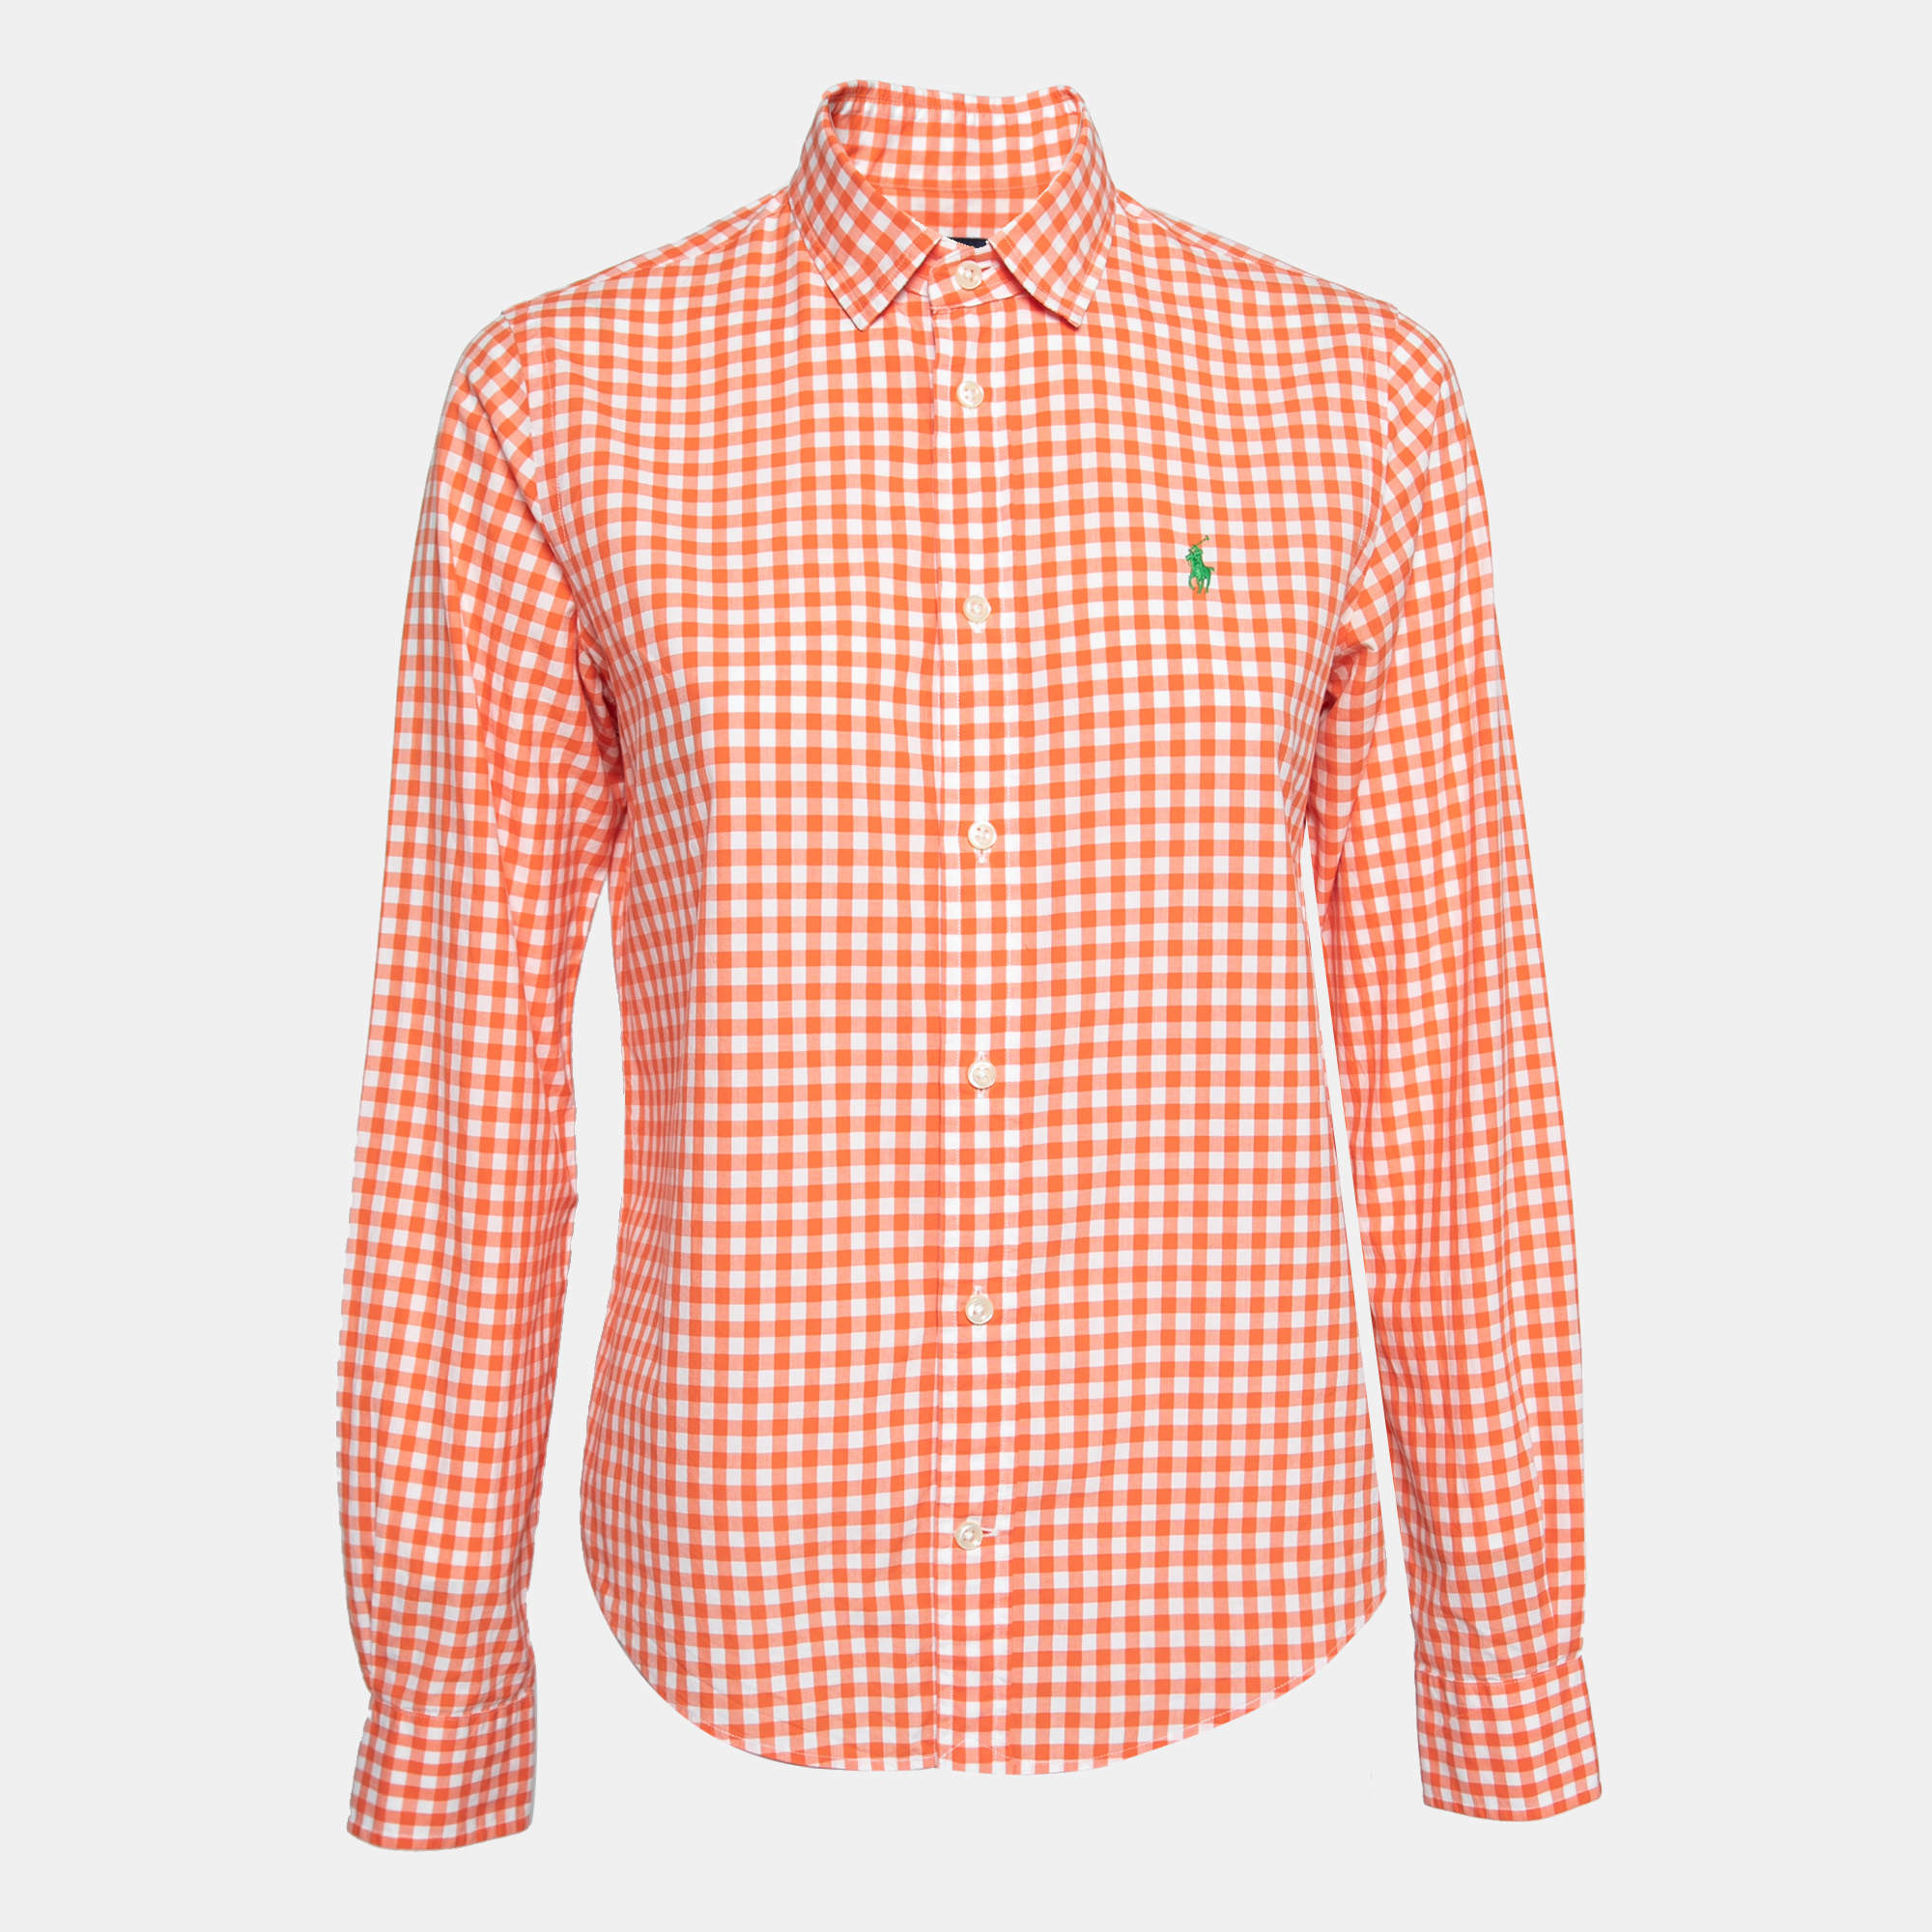 Polo Ralph Lauren Orange Gingham Checked Cotton Long Sleeve Shirt S